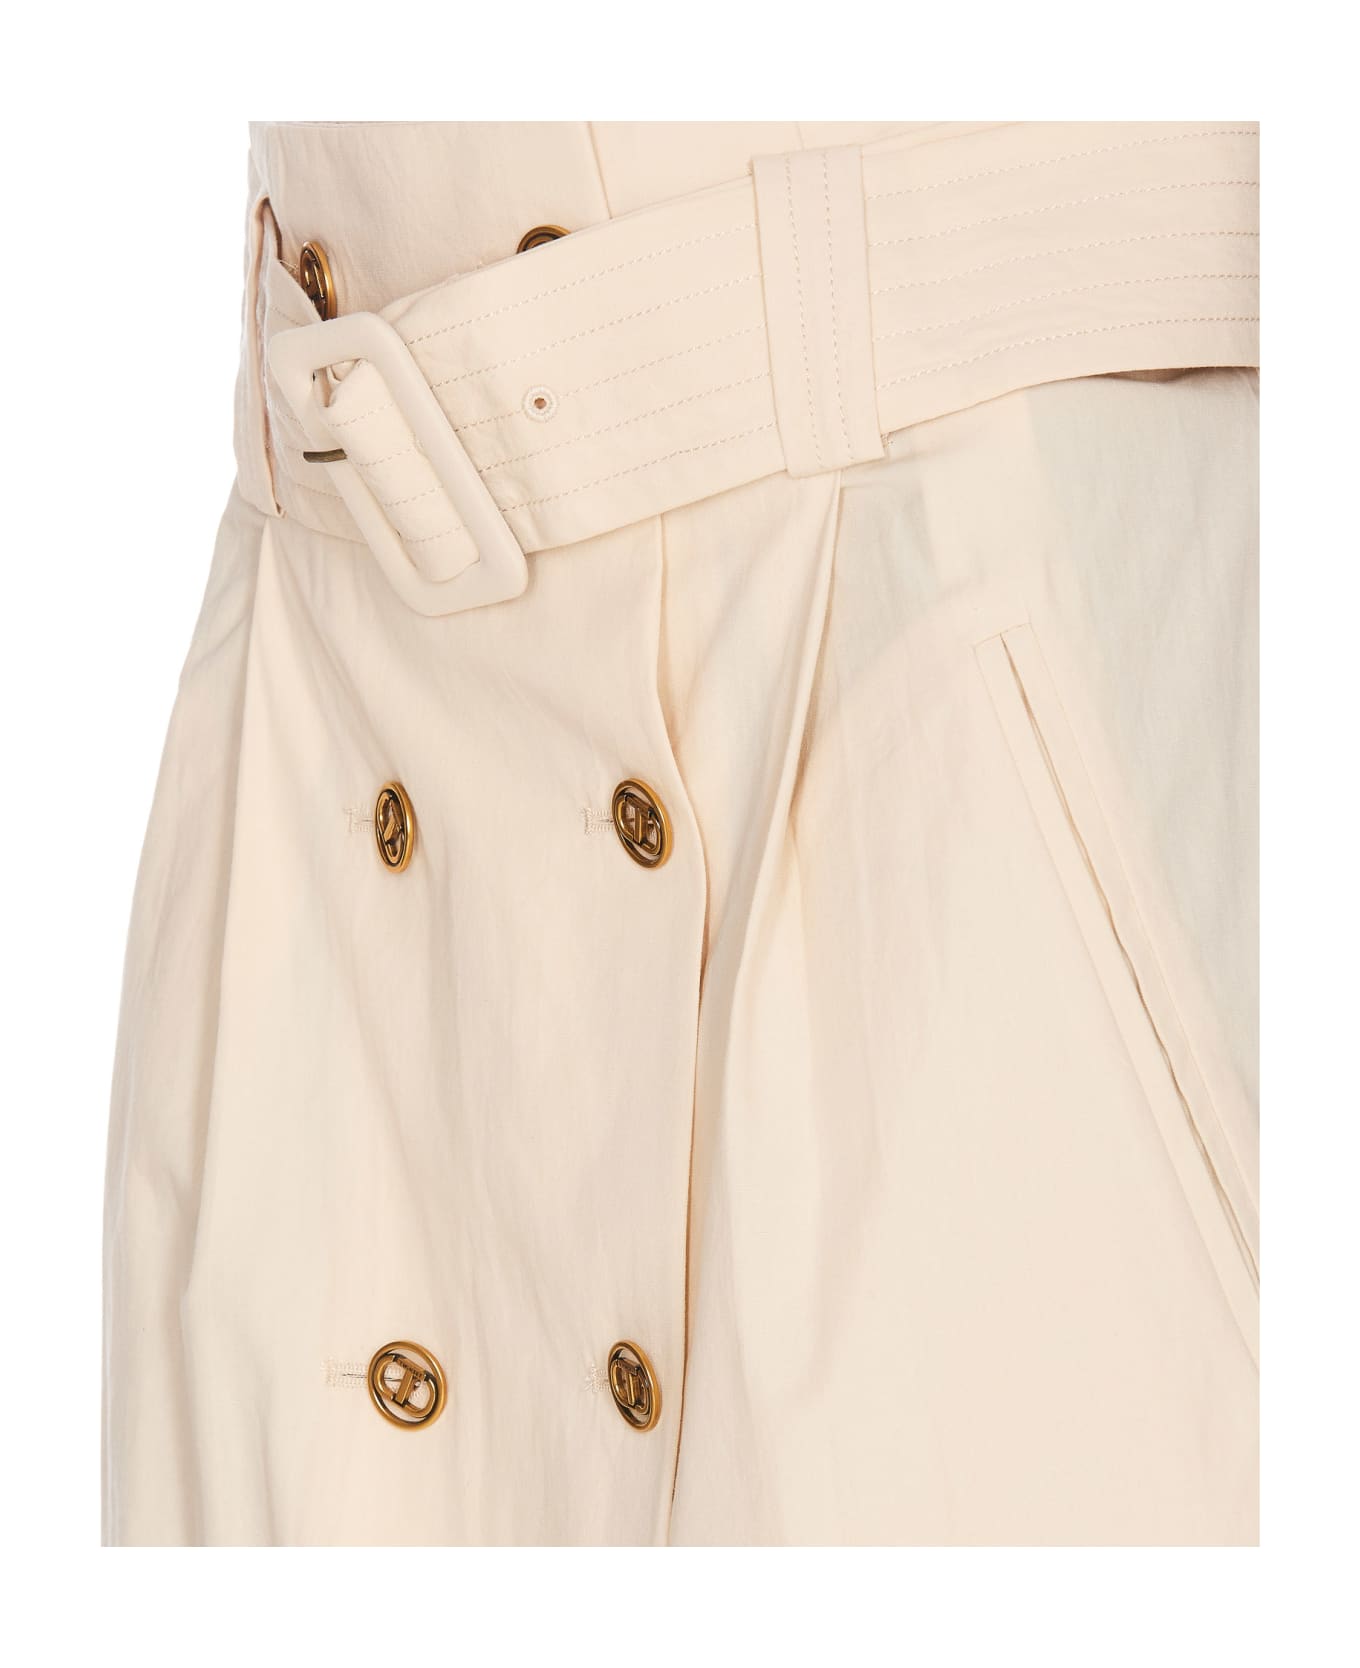 TwinSet Long Skirt - White